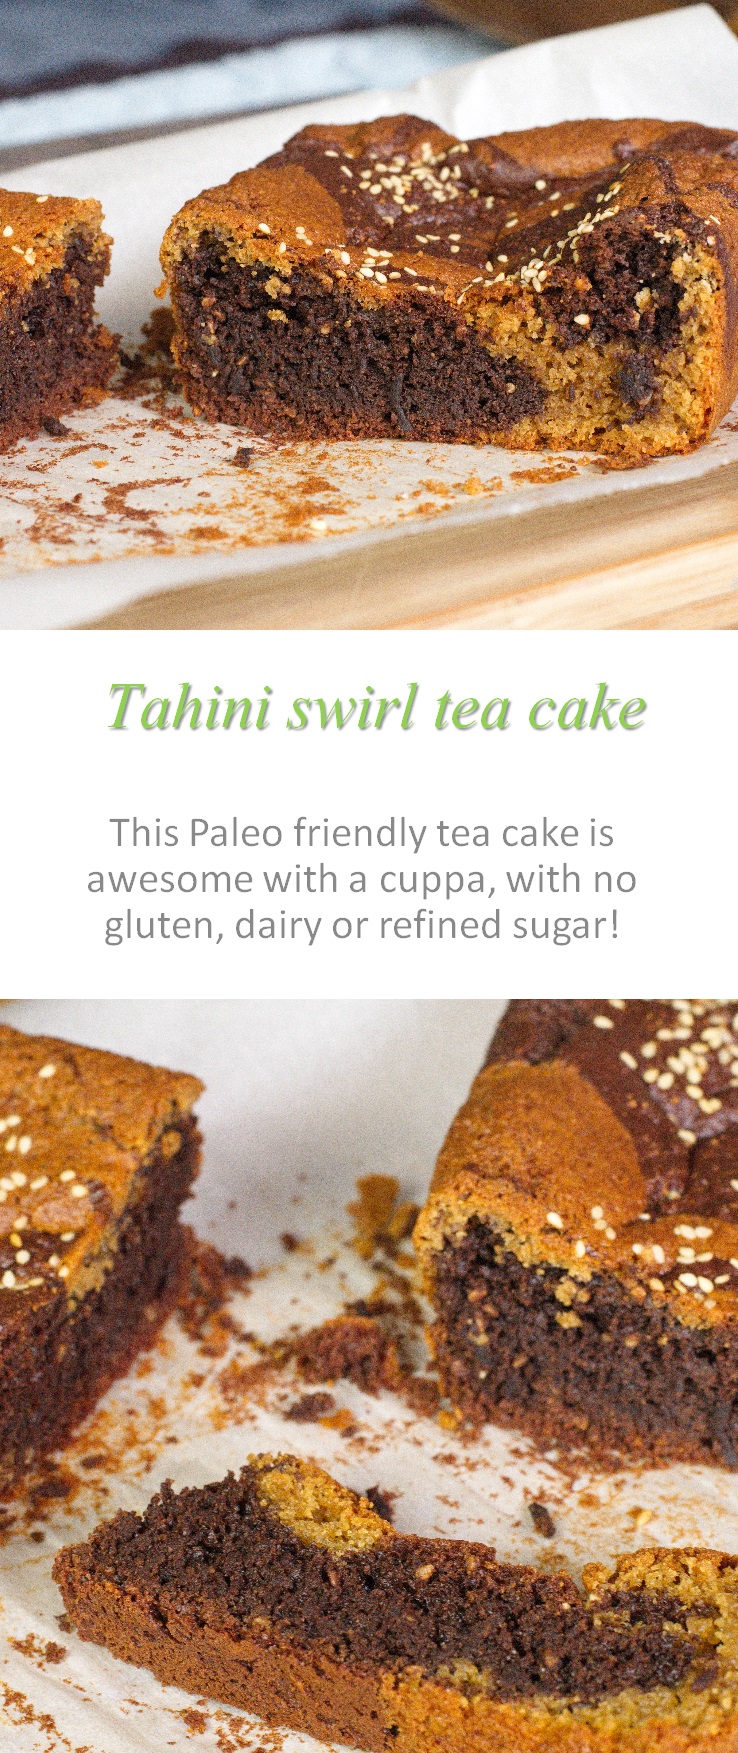 A nutty, seedy taste for this tahini swirl tea cake - the perfect accompaniment to any cuppa, hot or cold! #tahini #teacake #paleo #cookathome #glutenfree #dairyfree